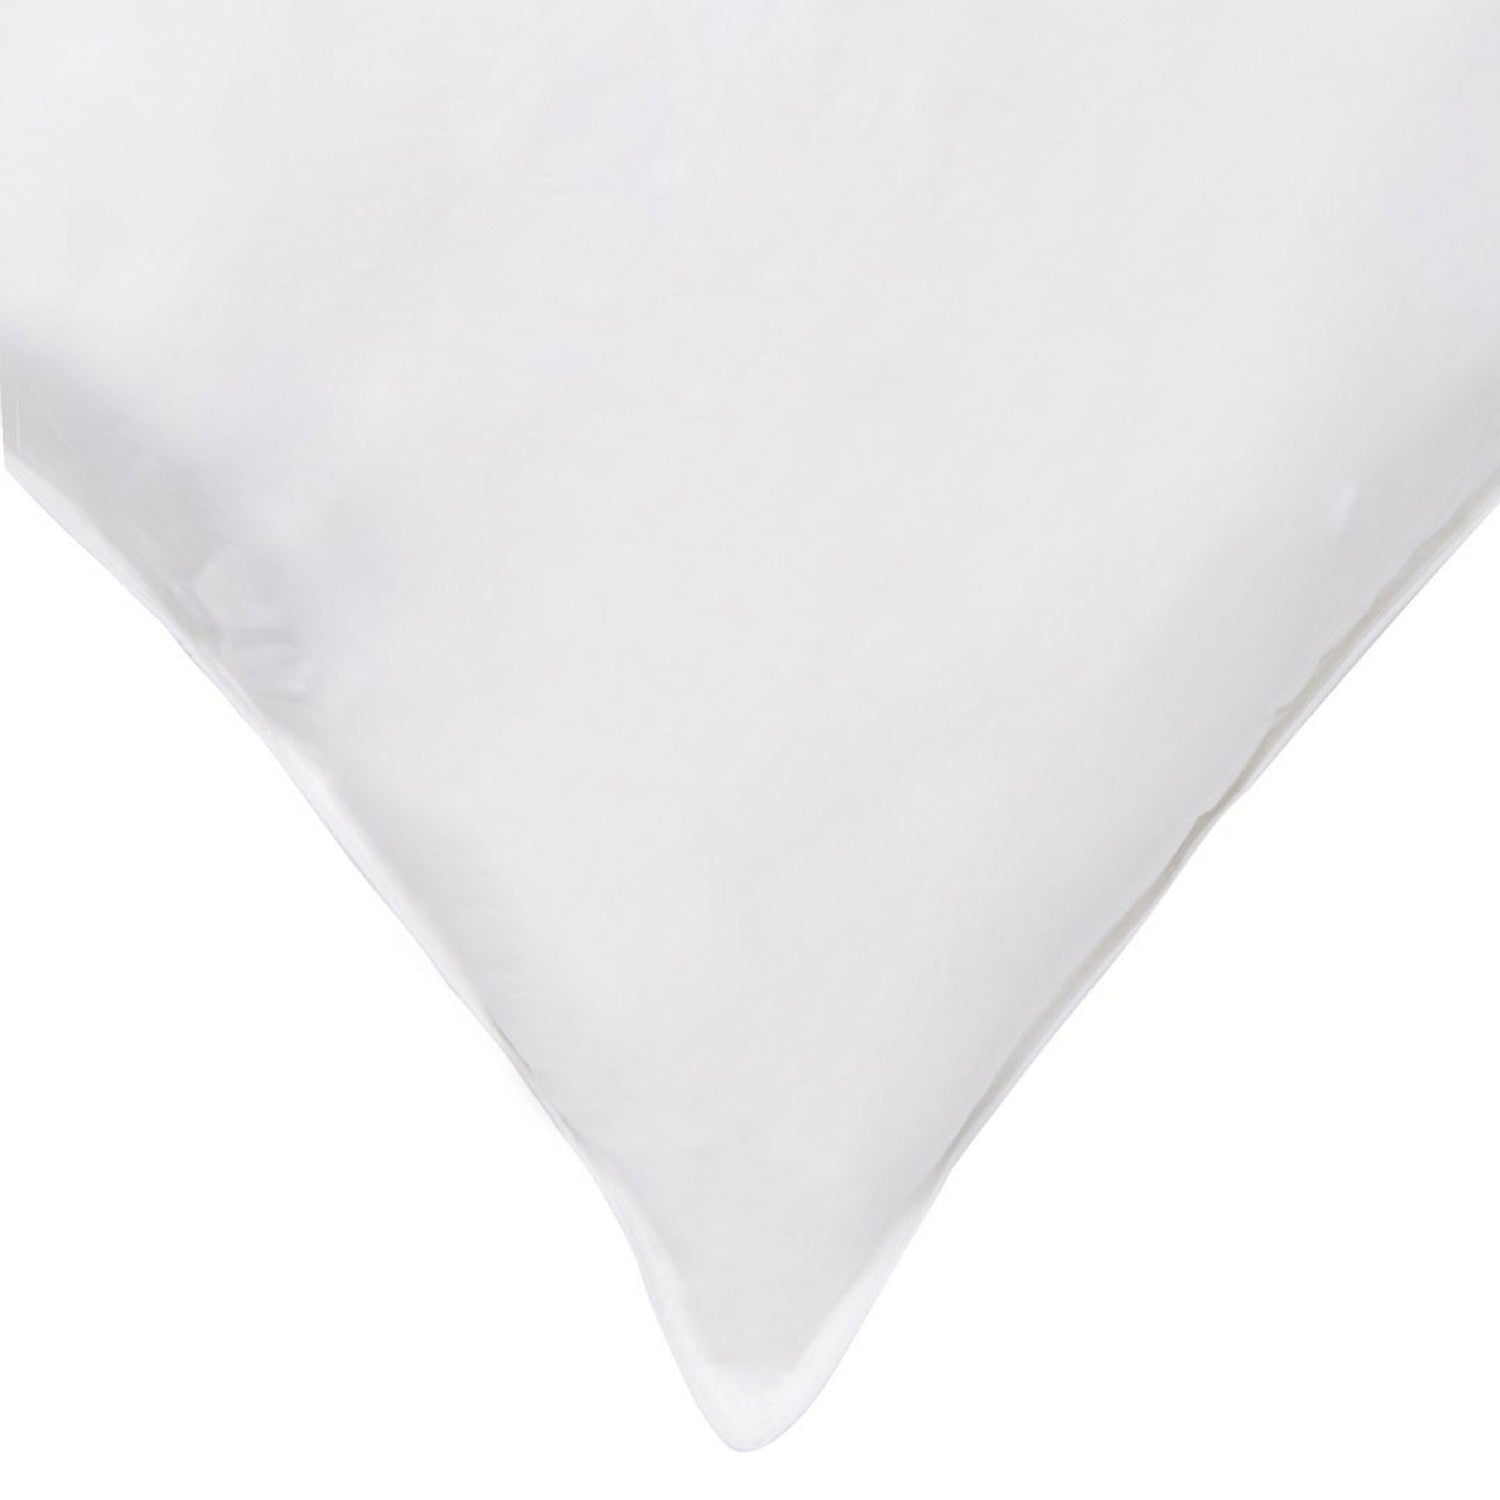 Soft Plush Gel Fiber Filled Allergy Resistant Stomach Sleeper Pillow